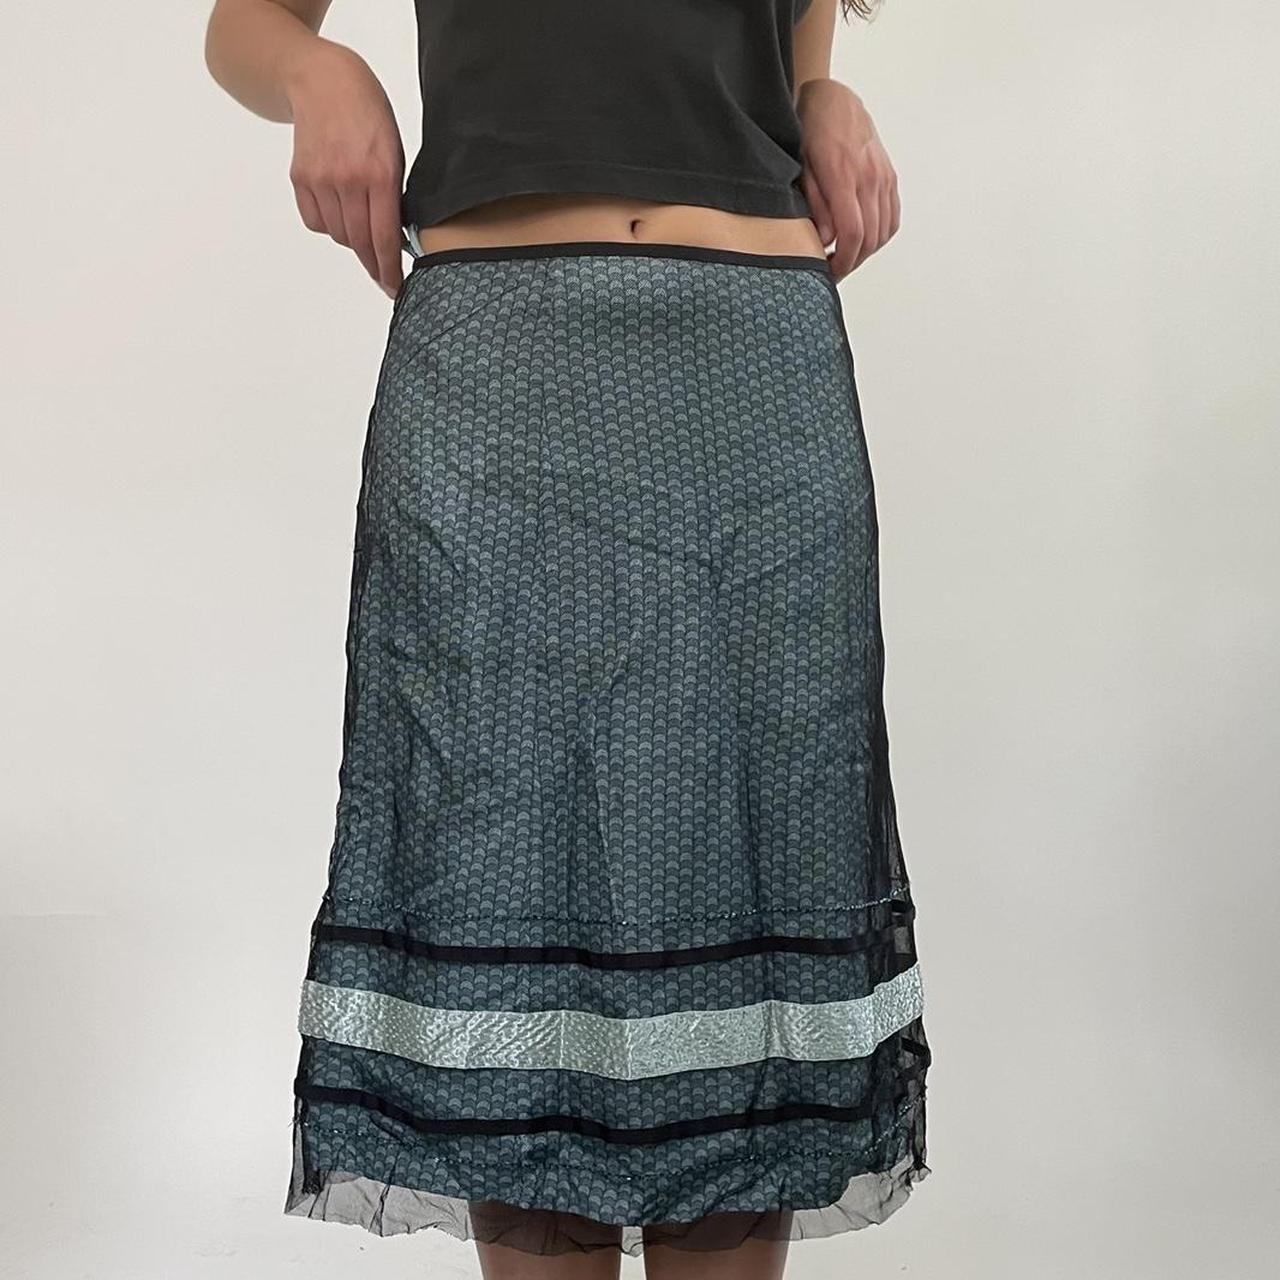 Teal and black mesh overlay midi skirt. Is almost... - Depop